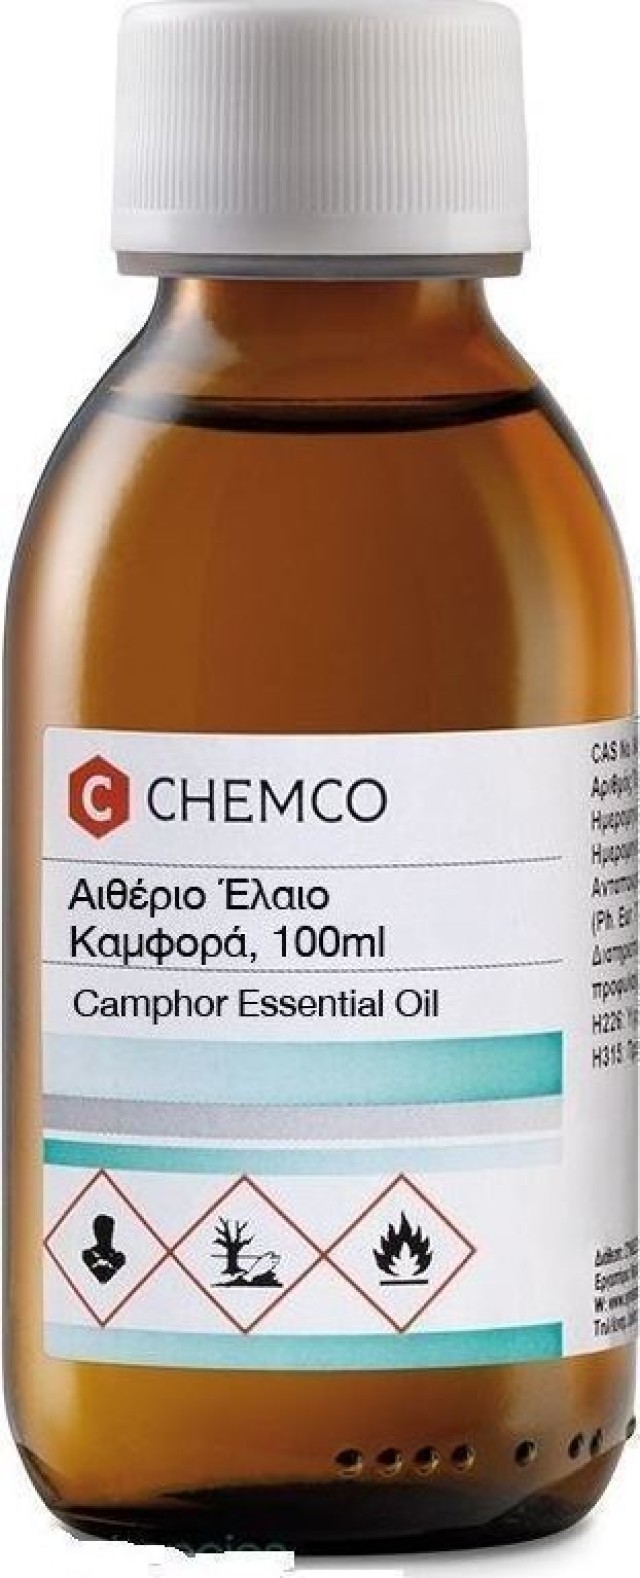 Chemco Αιθέριο Έλαιο Καμφοράς 100ml